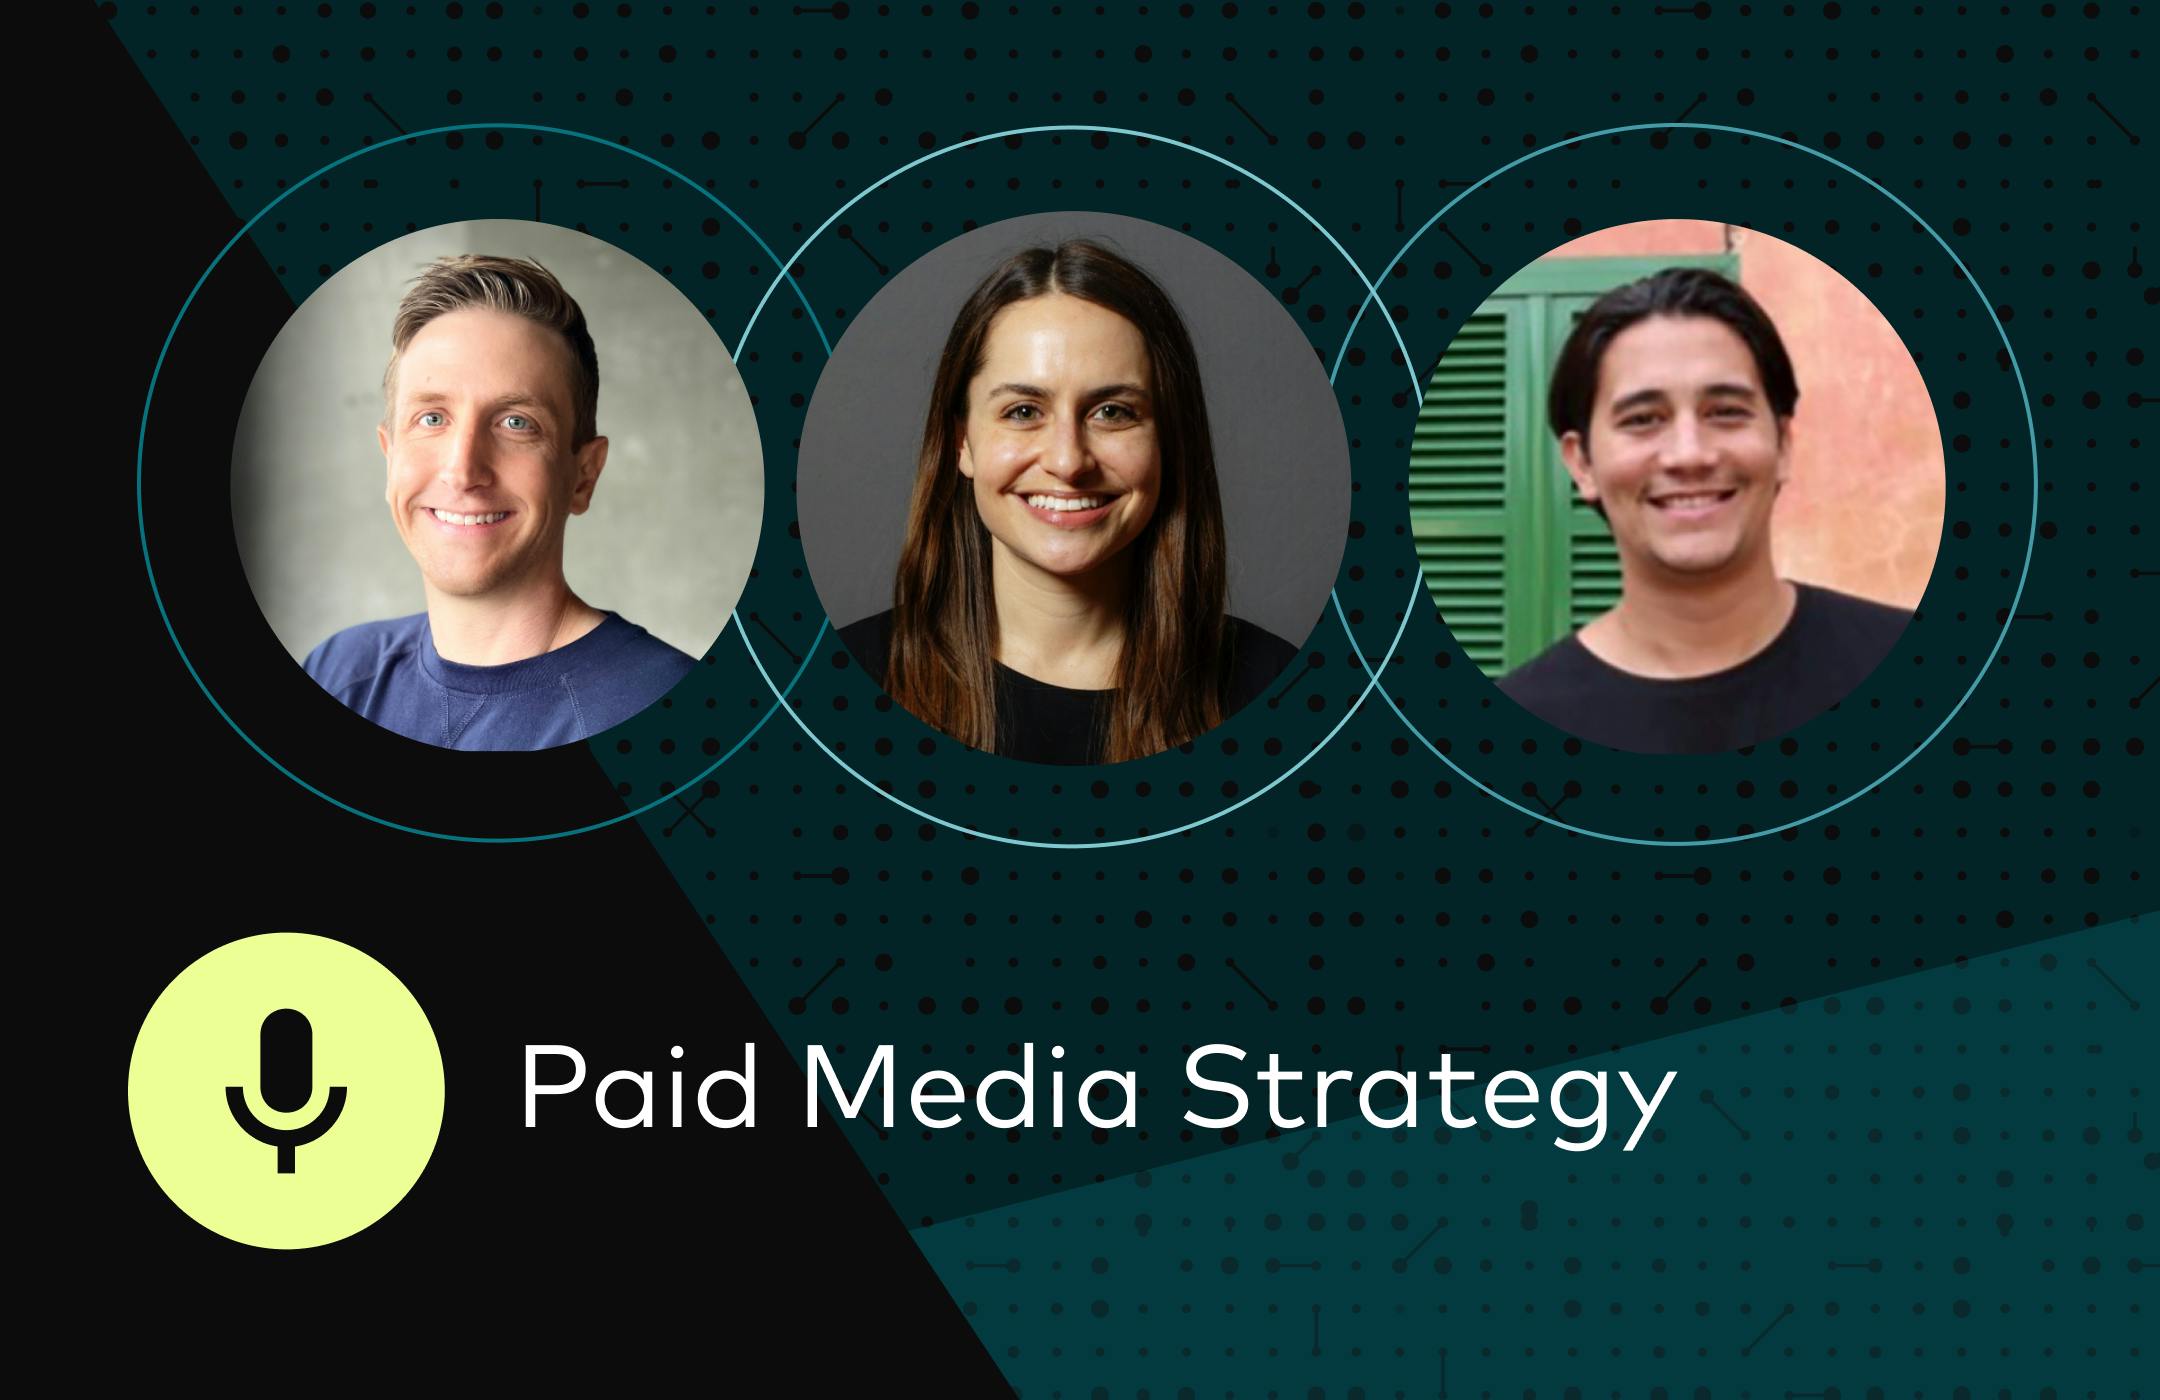 Paid Media Strategy webinar featuring three speakers